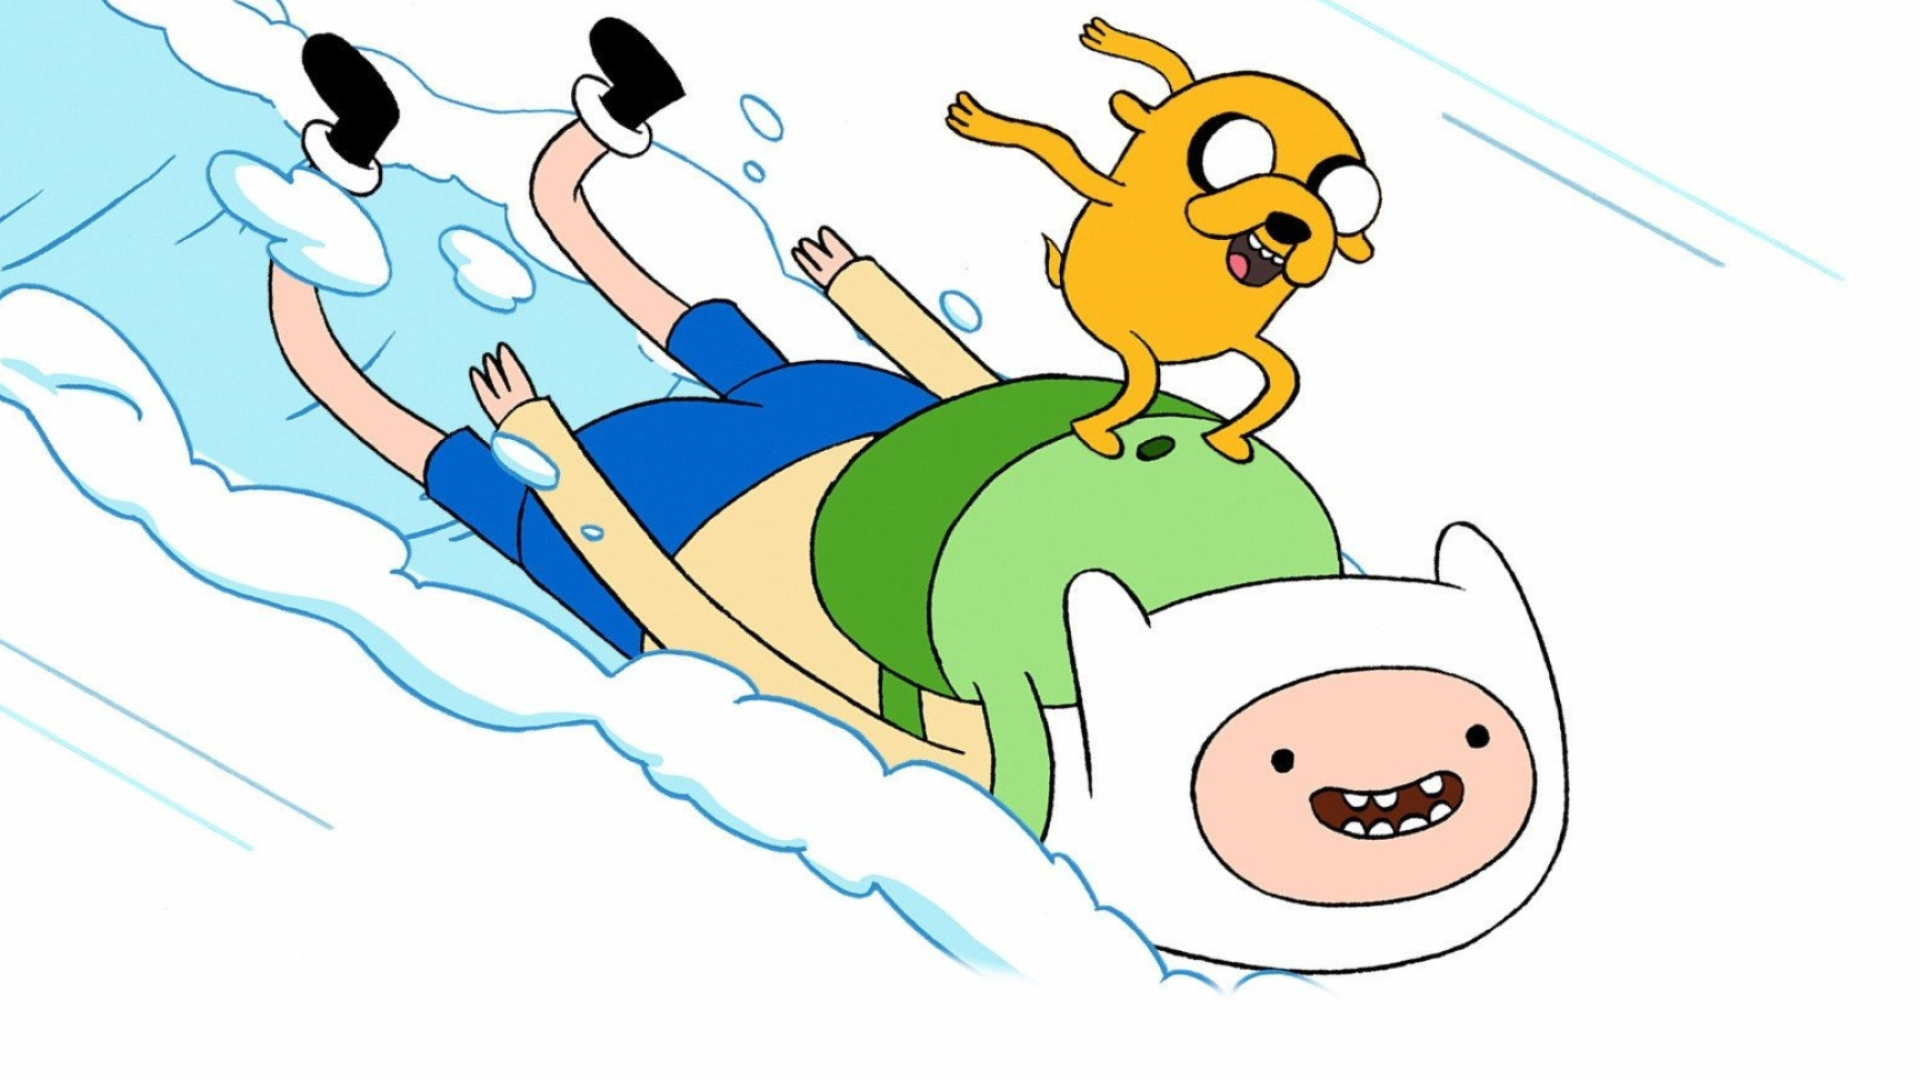 Adventure Time wallpapers, Finn and Jake, Cartoon fantasy, Whimsical adventure, 1920x1080 Full HD Desktop